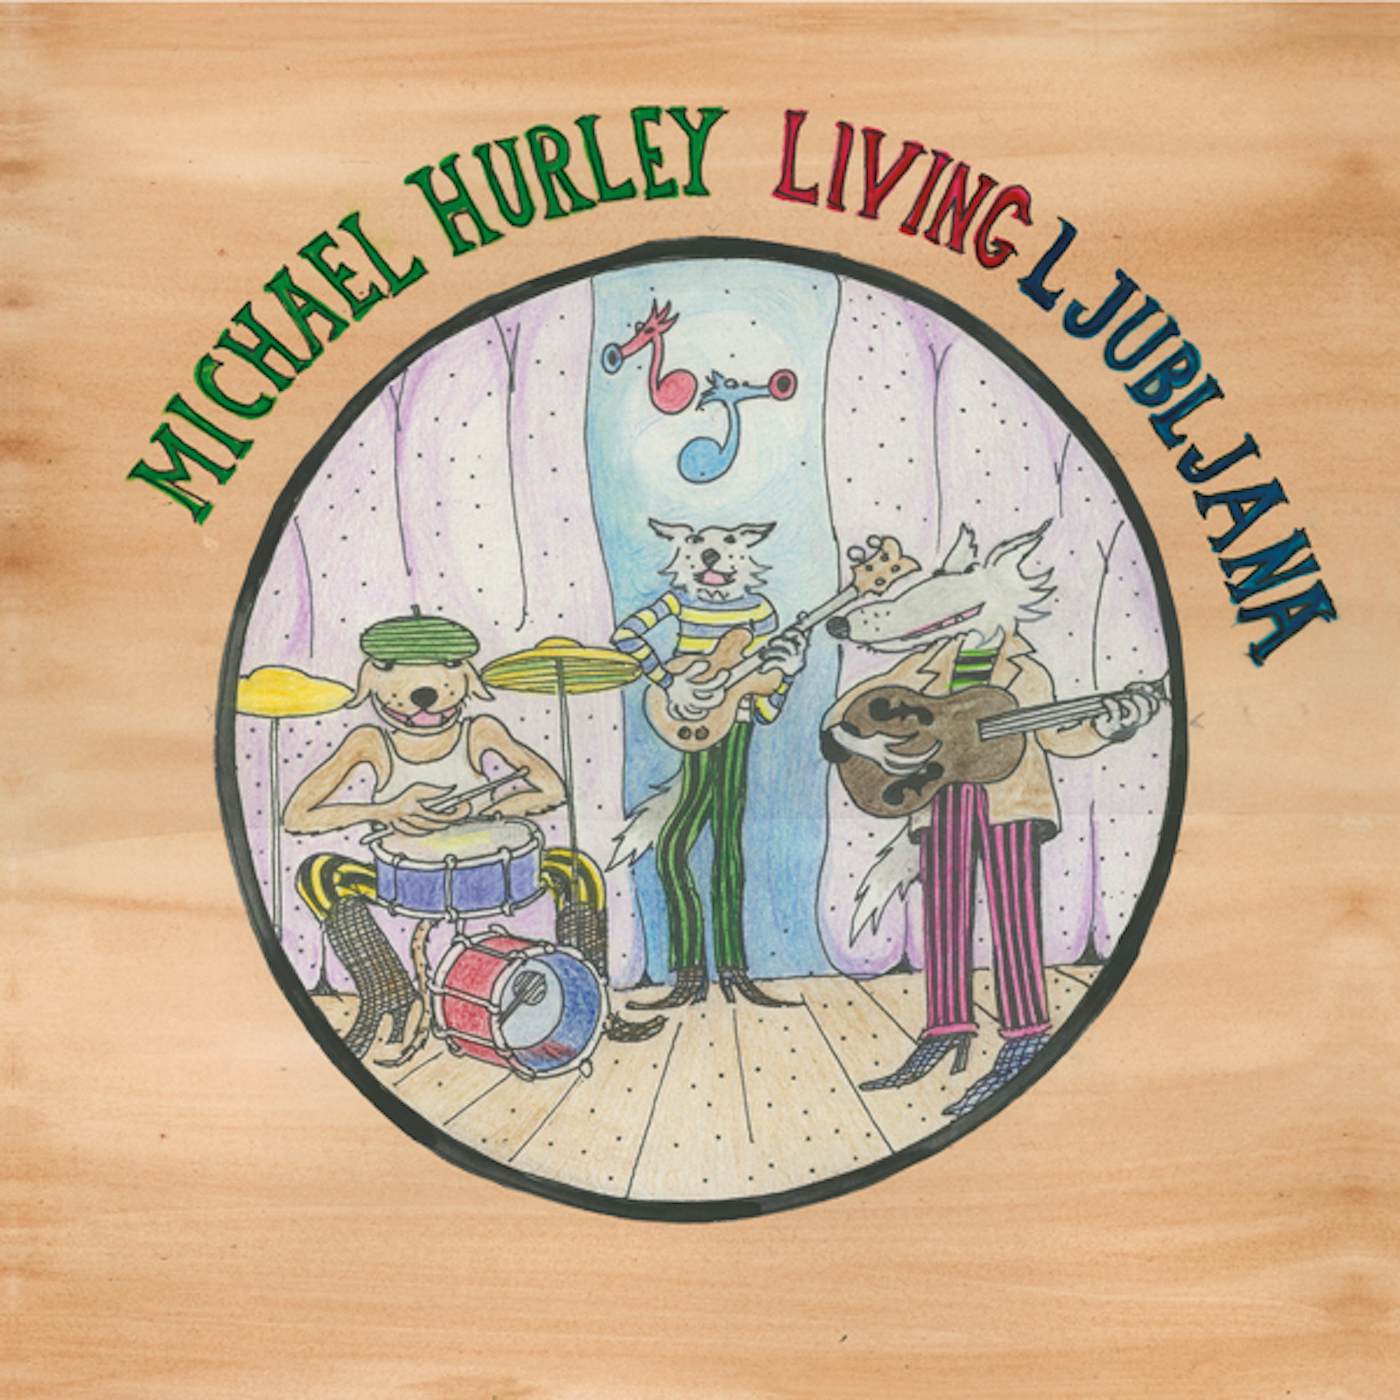 Michael Hurley LIVING LJUBLJANA Vinyl Record